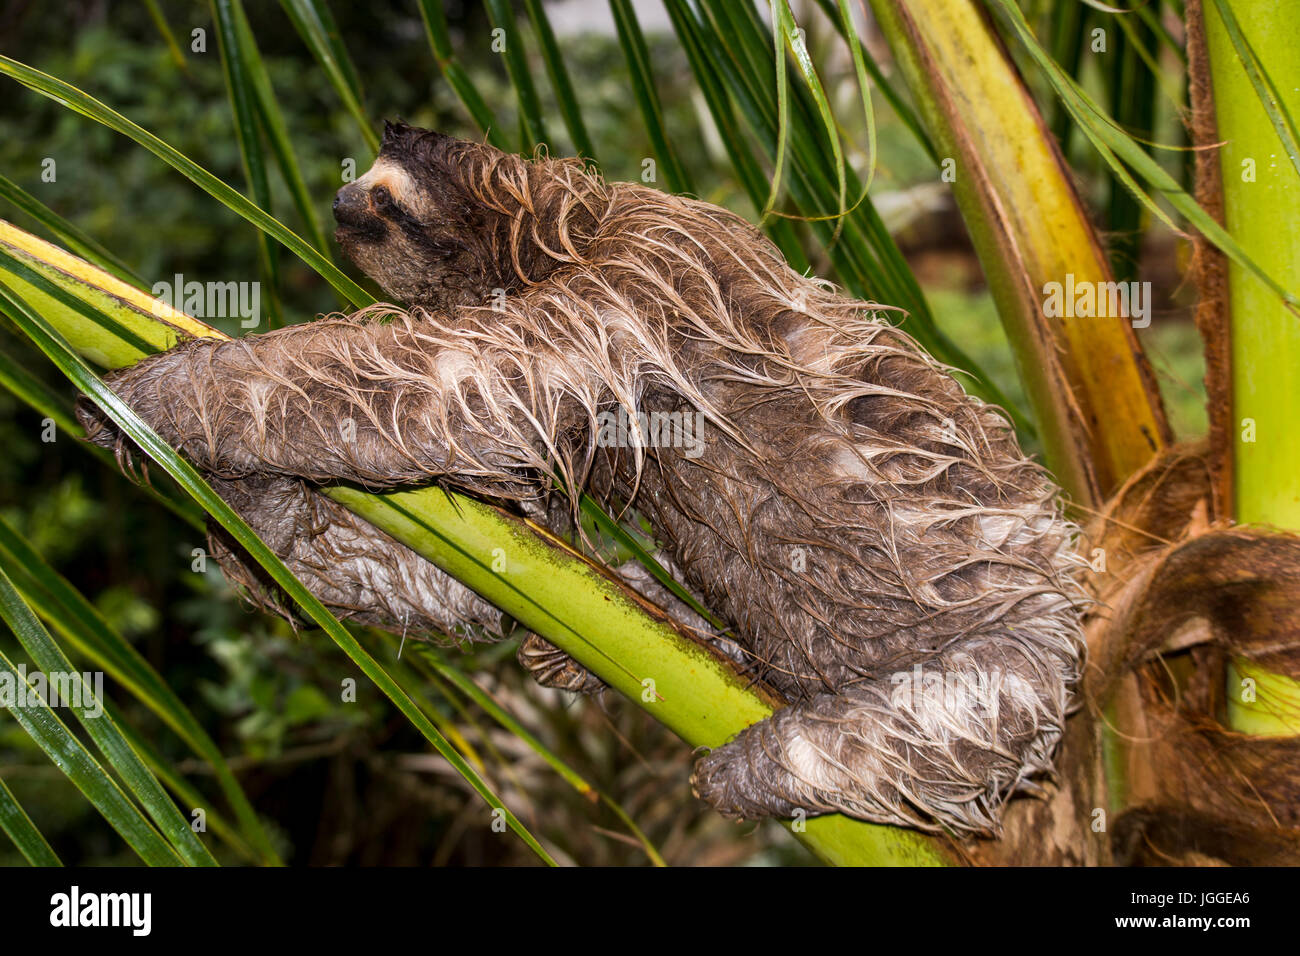 Perezoso de tres dedos húmedos wildlife imagen tomada en Panamá Foto de stock